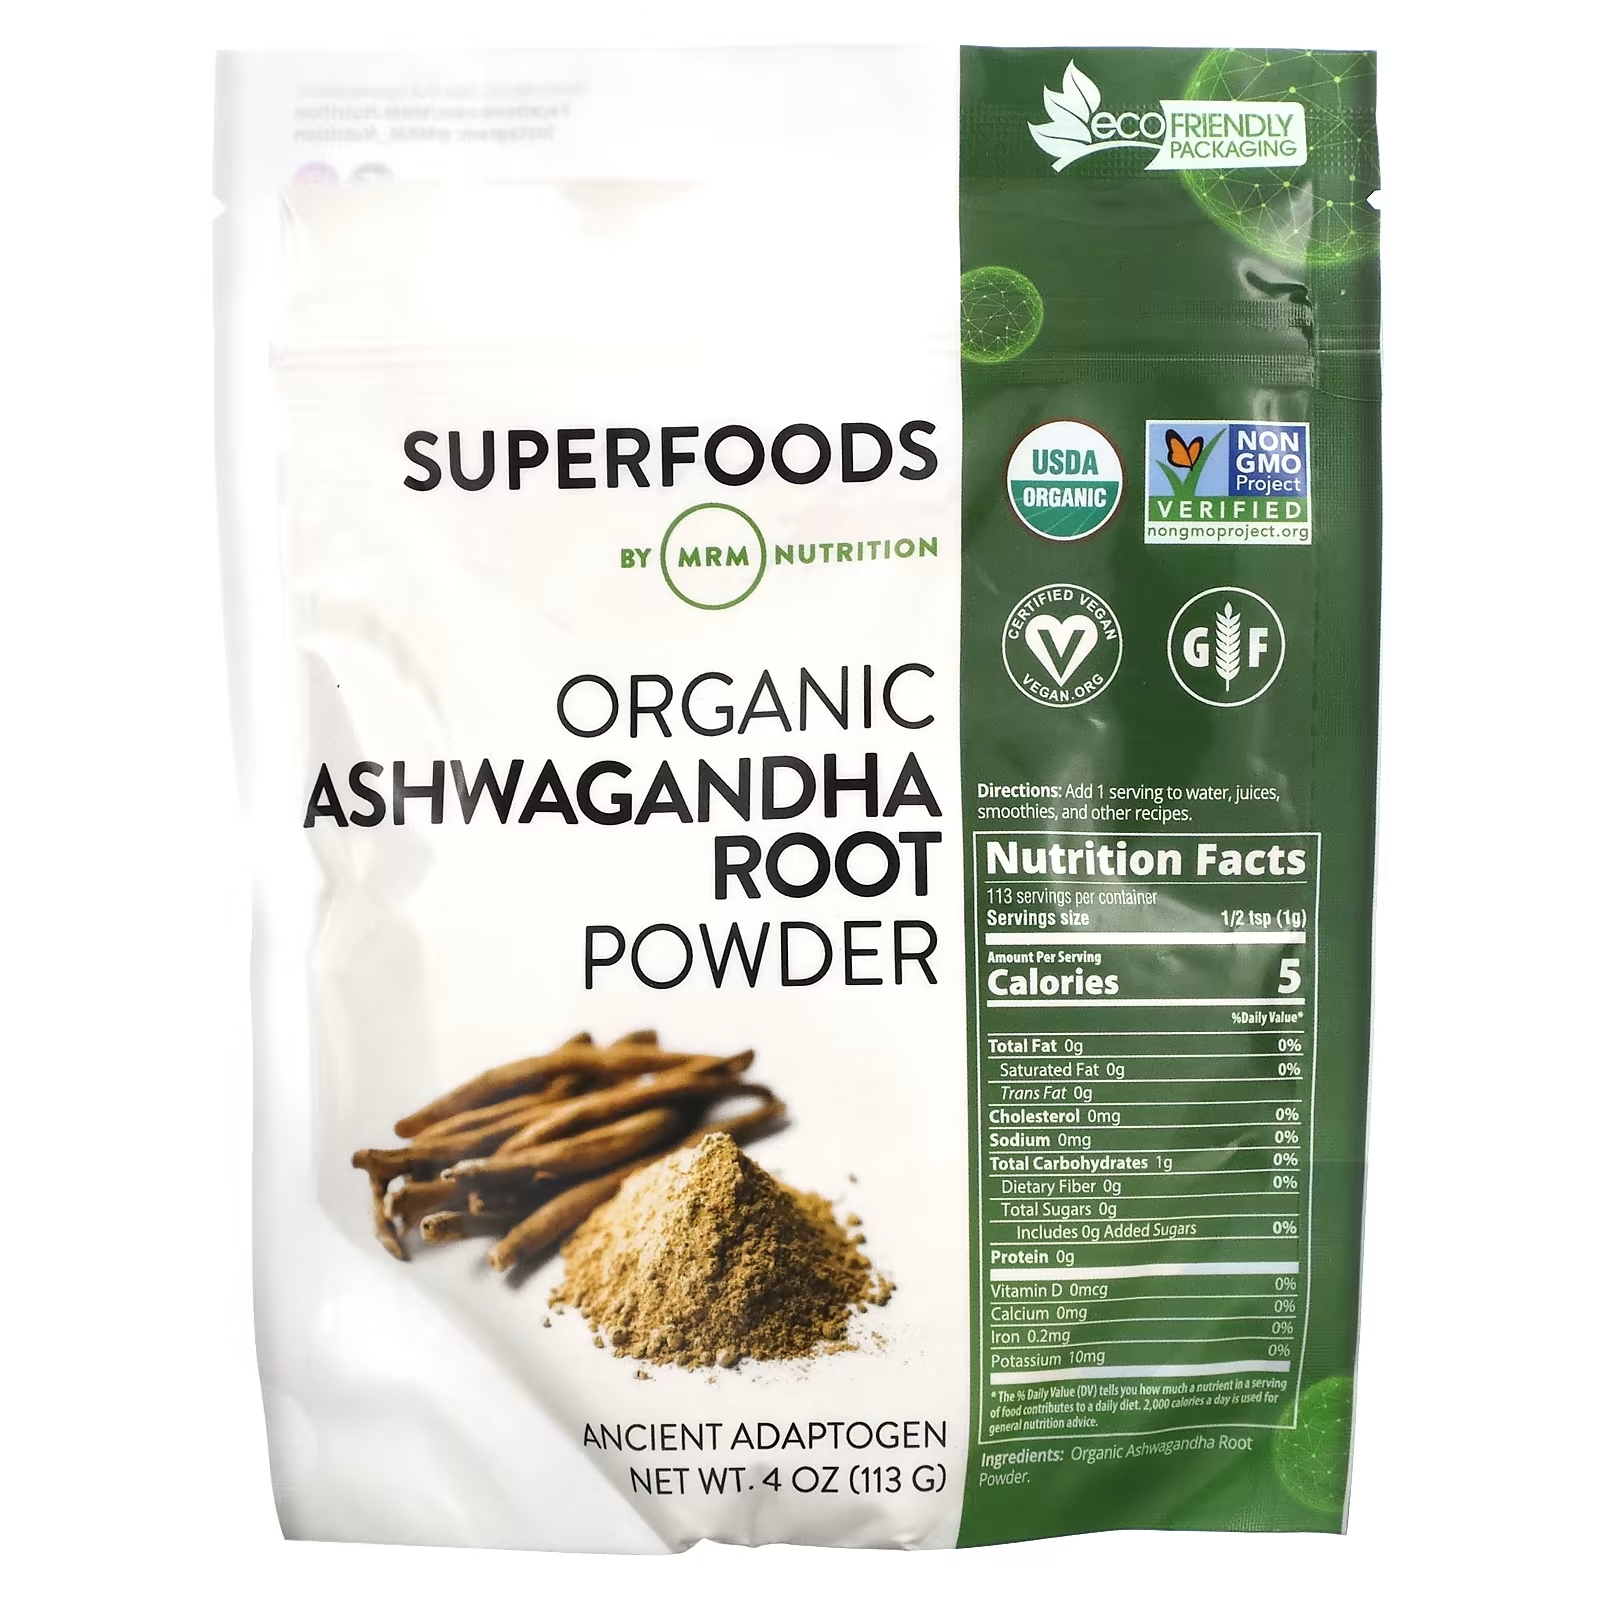 MRM Nutrition Organic Ashwagandha Root Powder, 113 г south african drunken eggplant ashwagandha powder extract organic root tea has remarkable antioxidant capacity